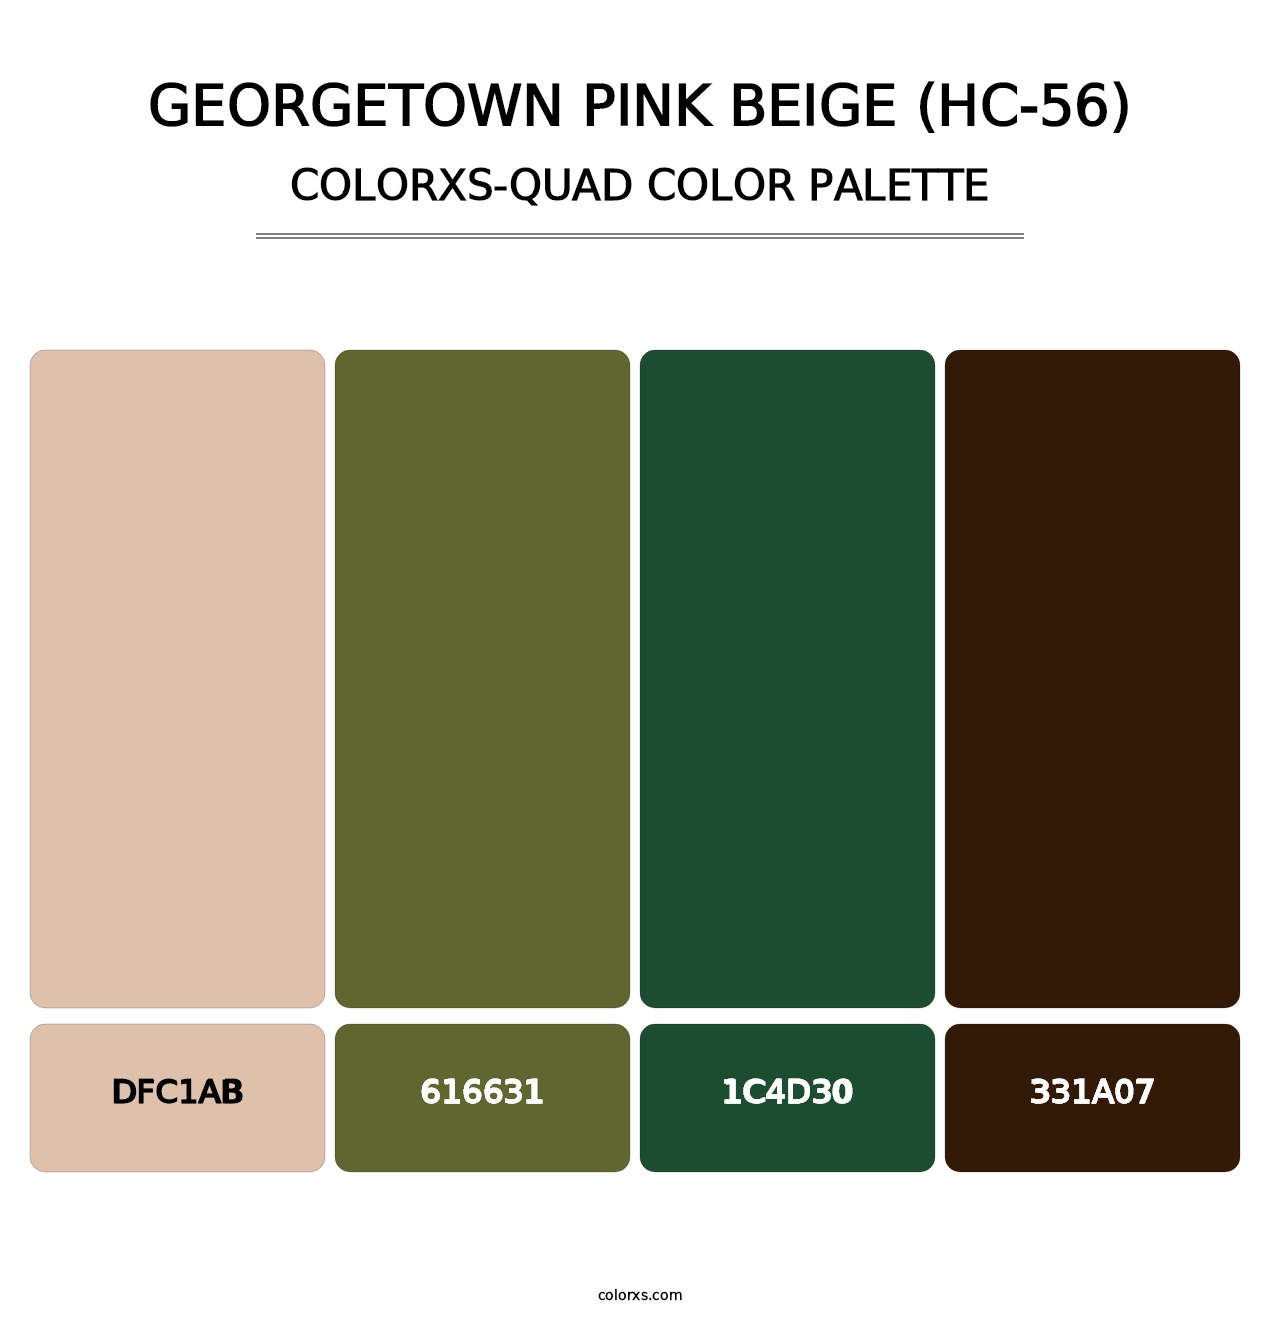 Georgetown Pink Beige (HC-56) - Colorxs Quad Palette